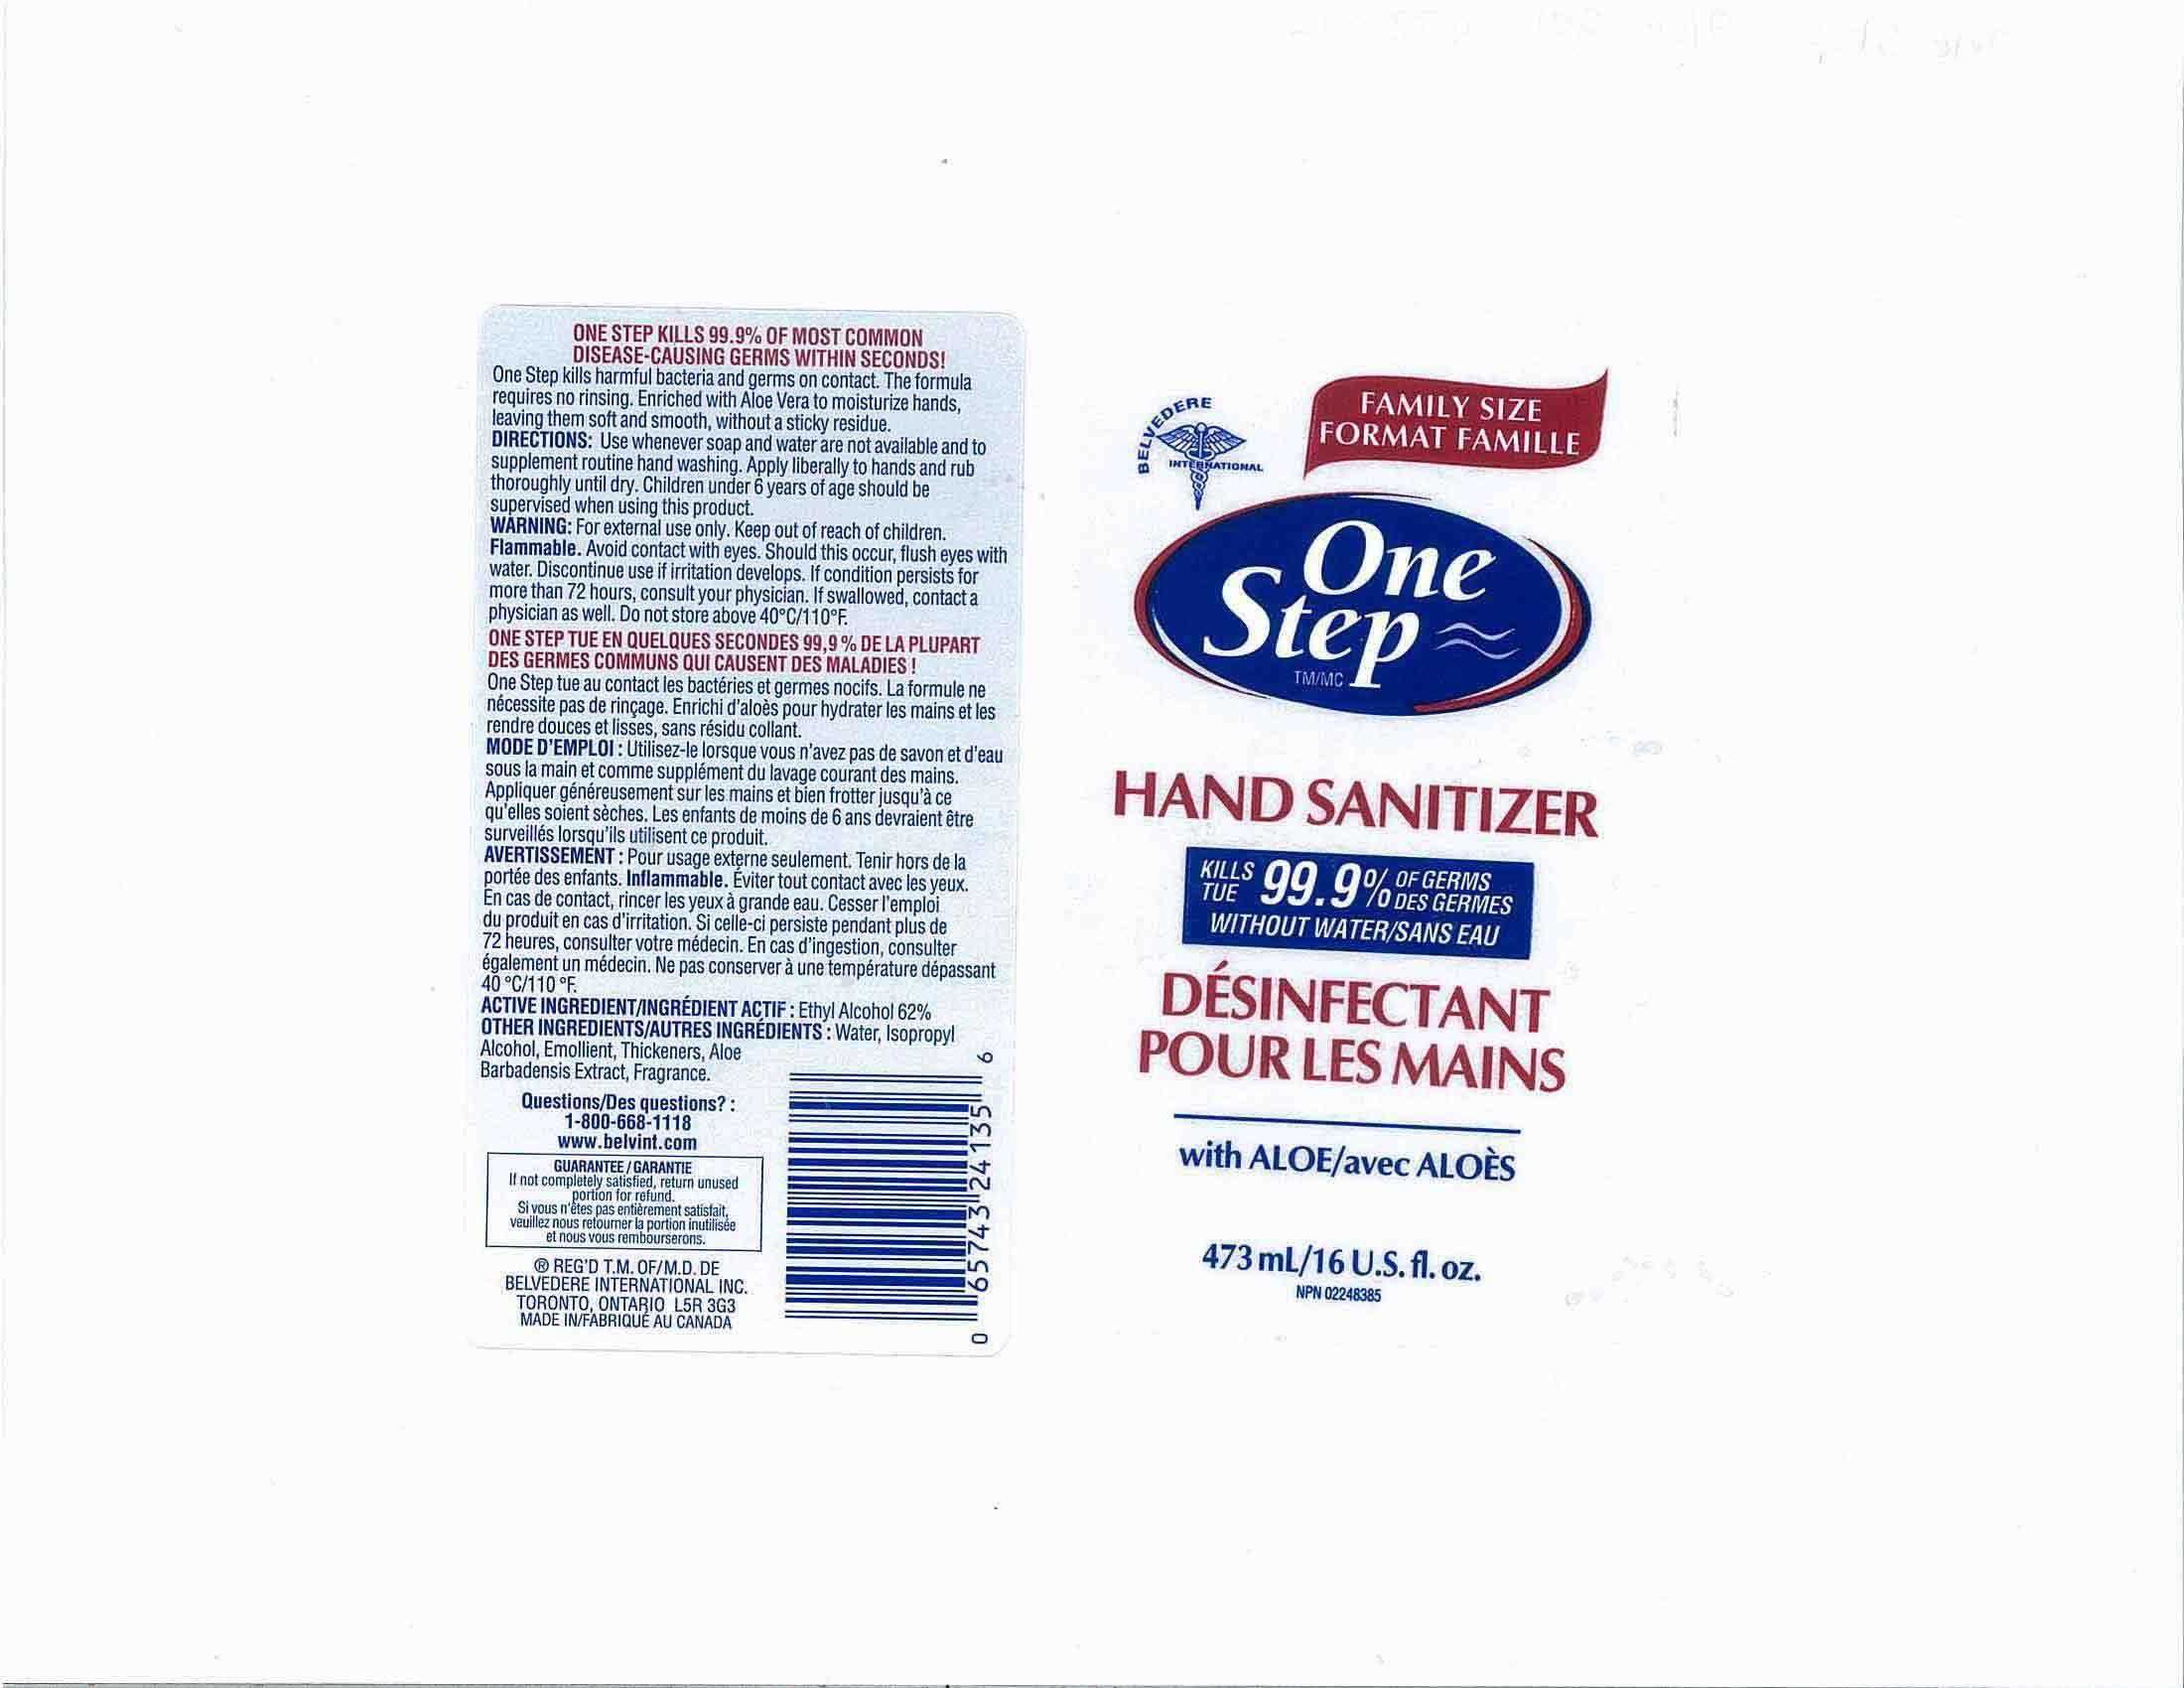 One Step Hand Sanitizer